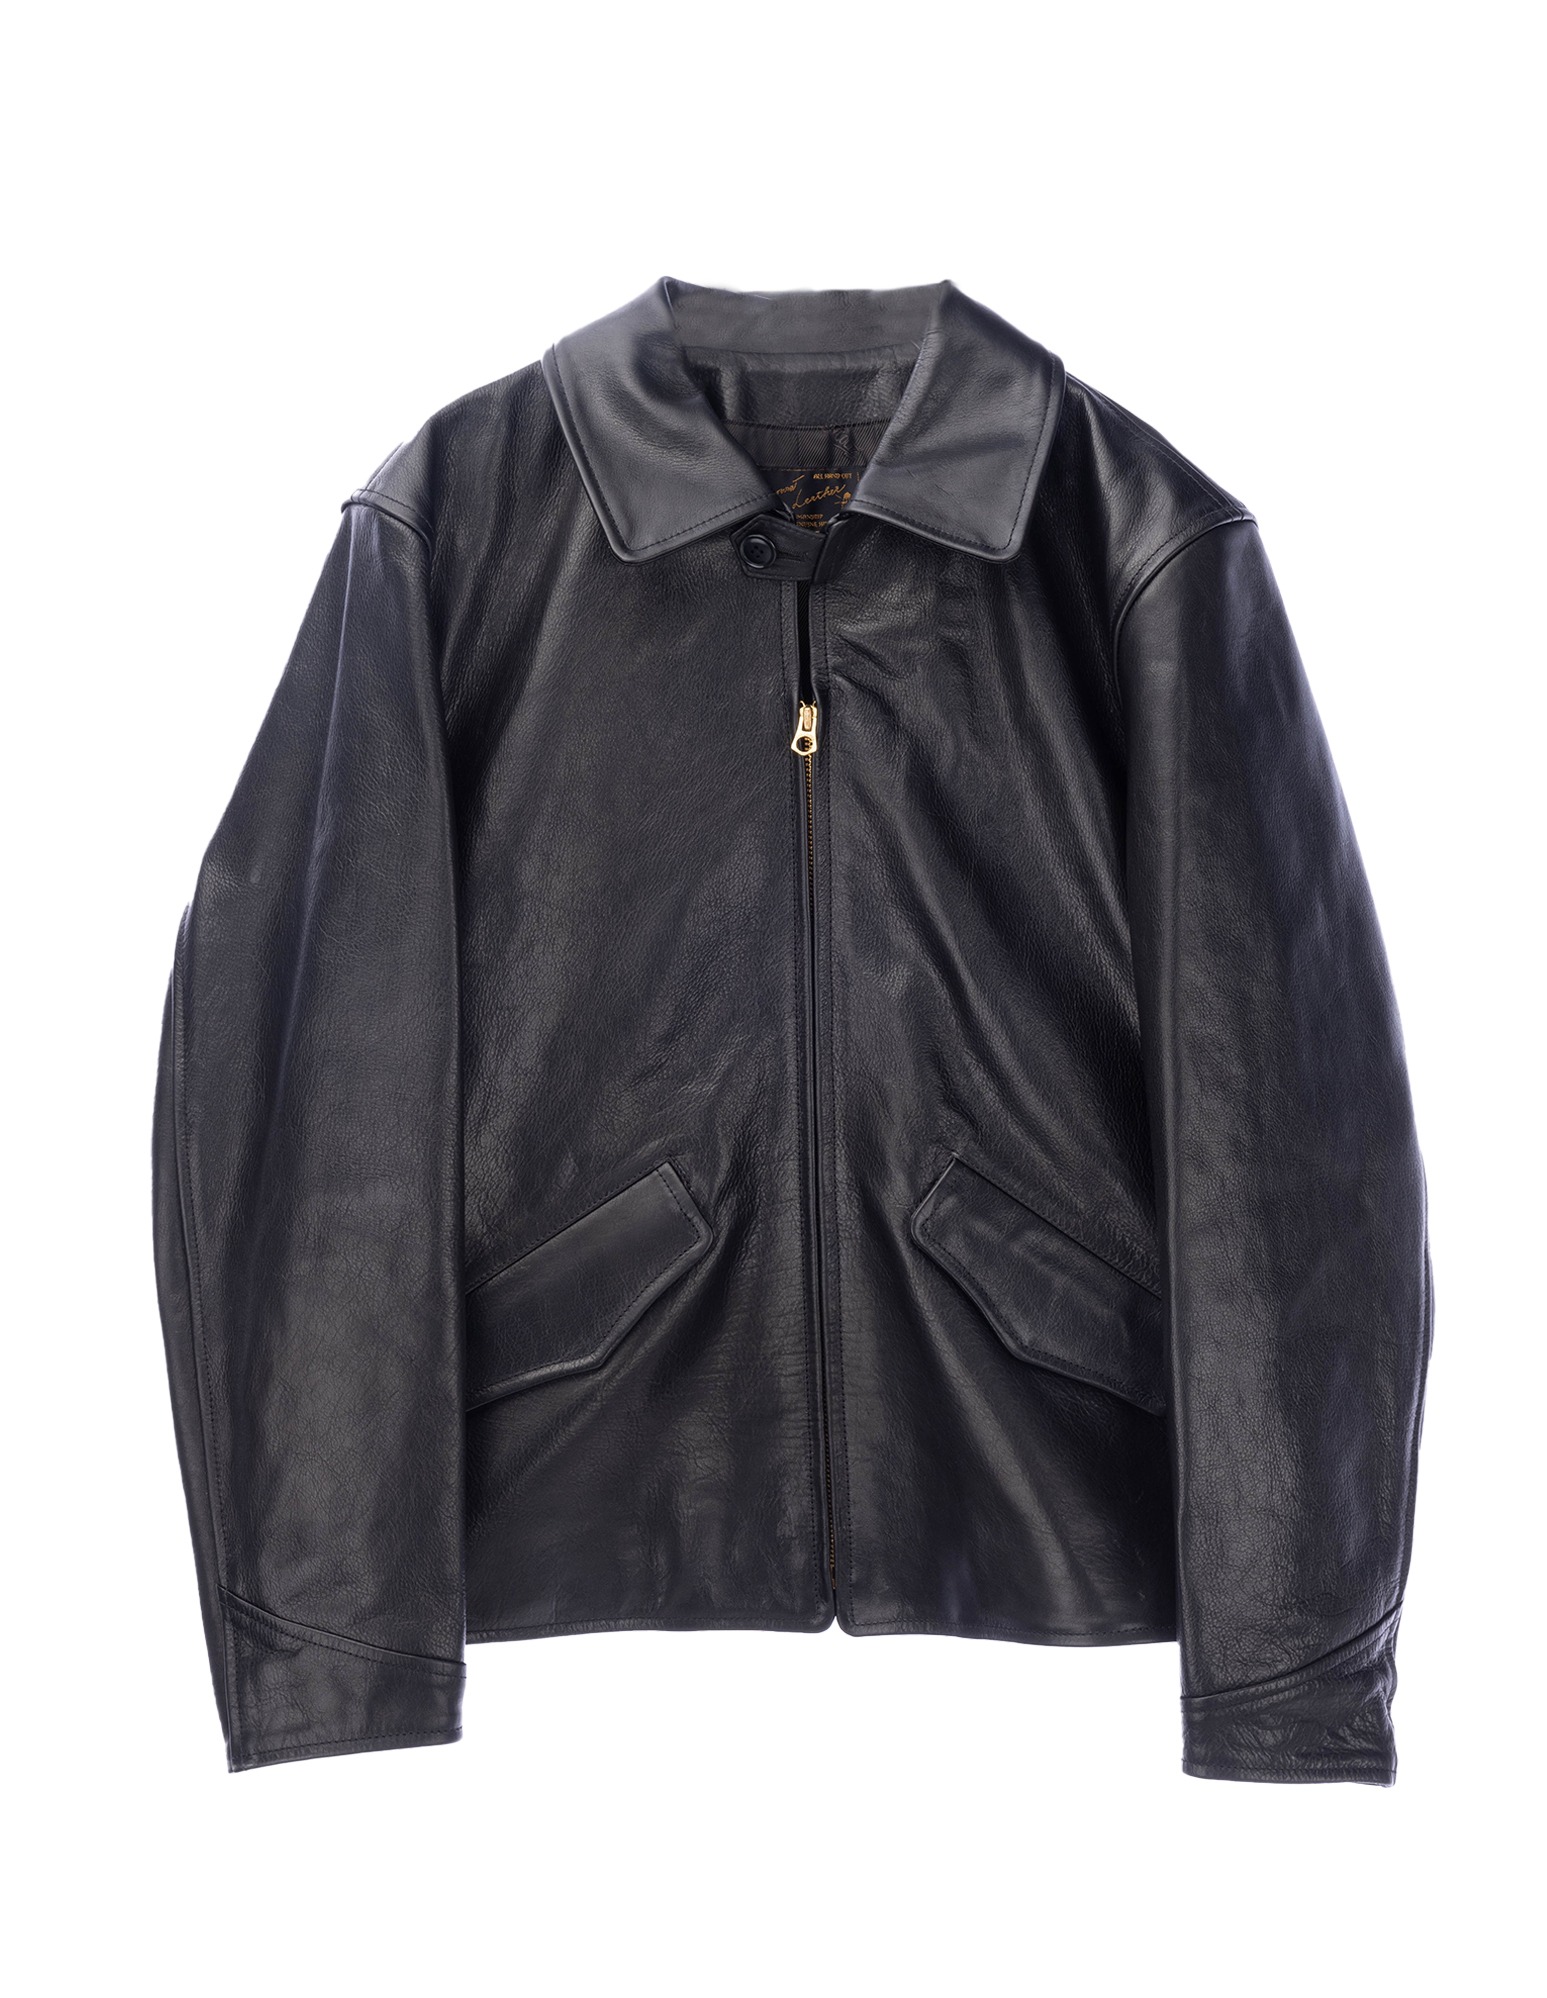 Sasha Leather Jacket (Black)